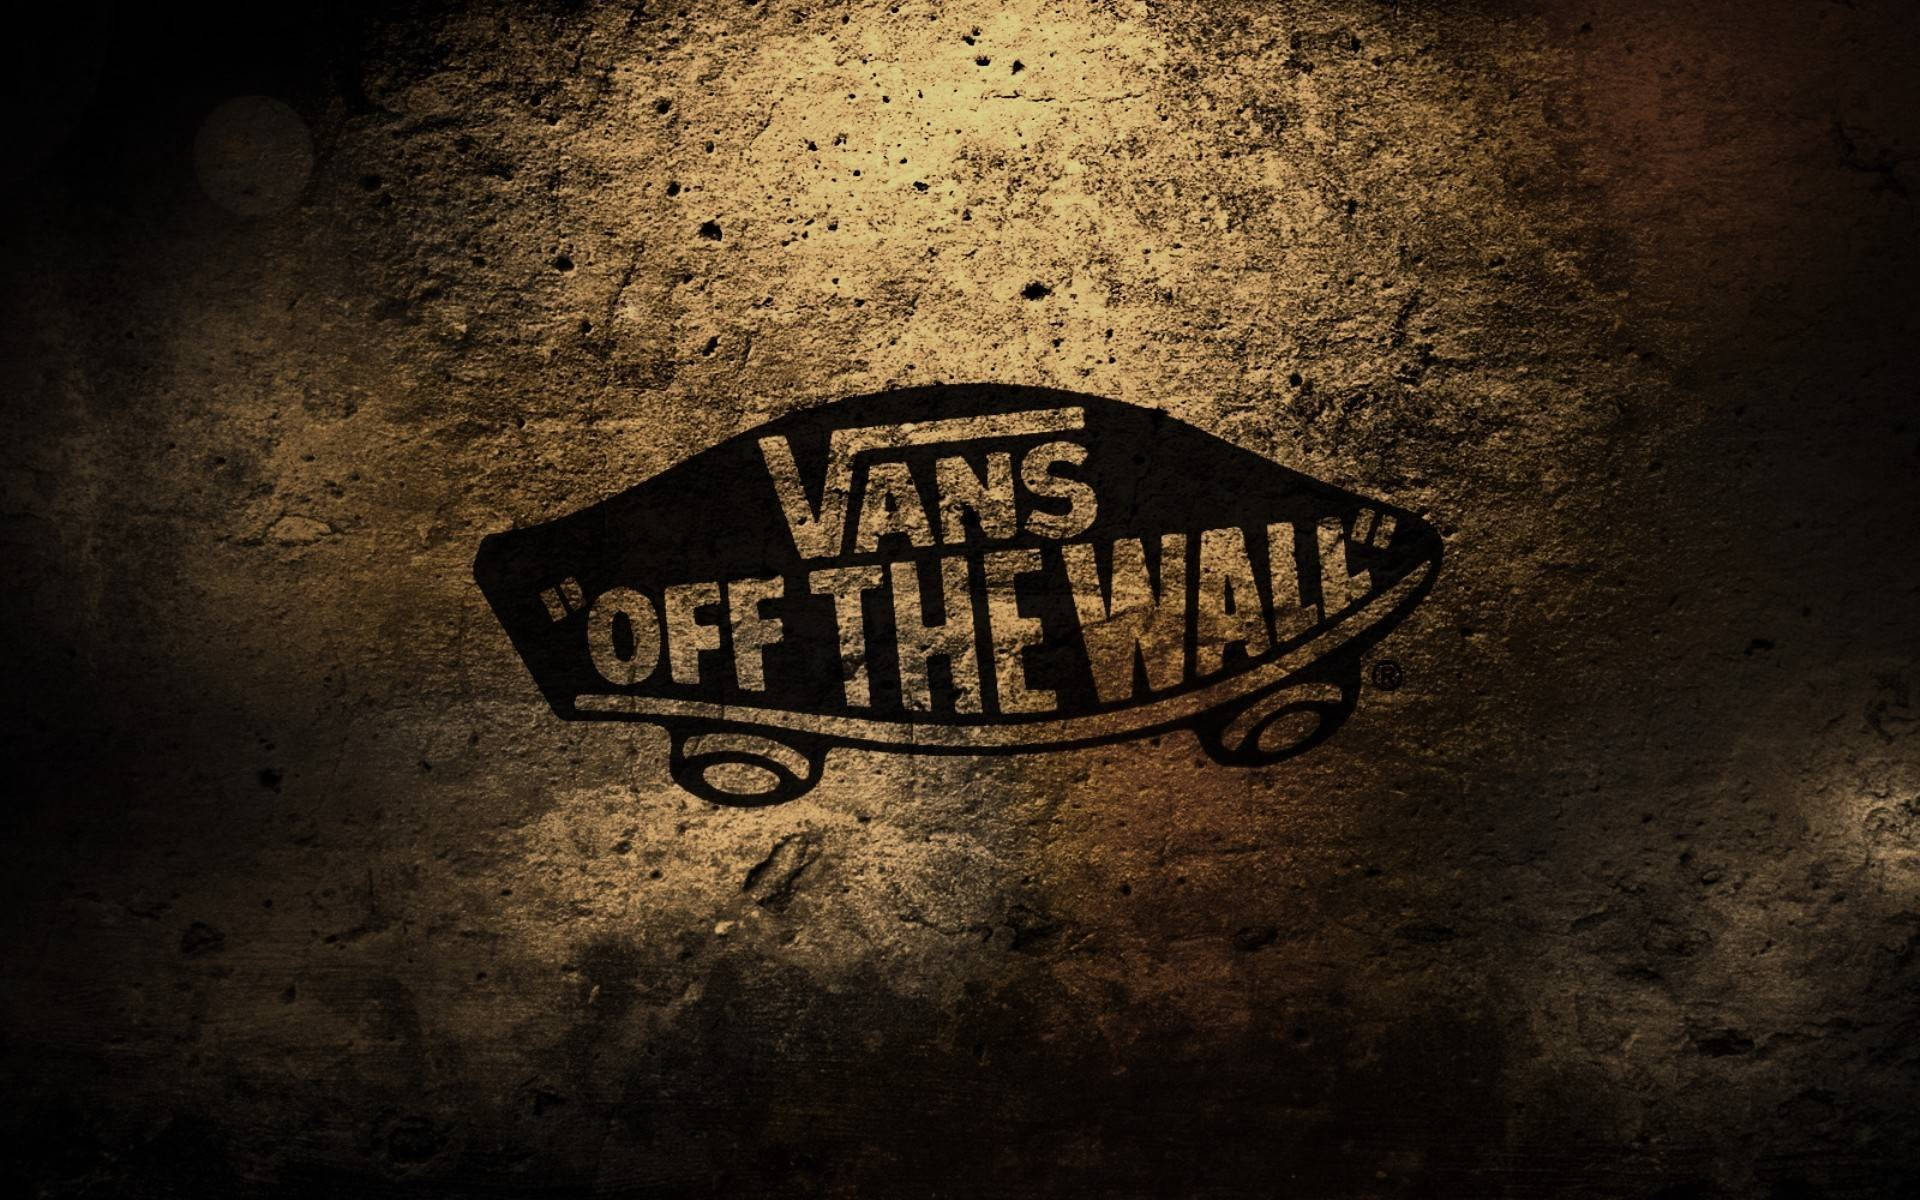 Vans Off The Wall Rock Wallpaper